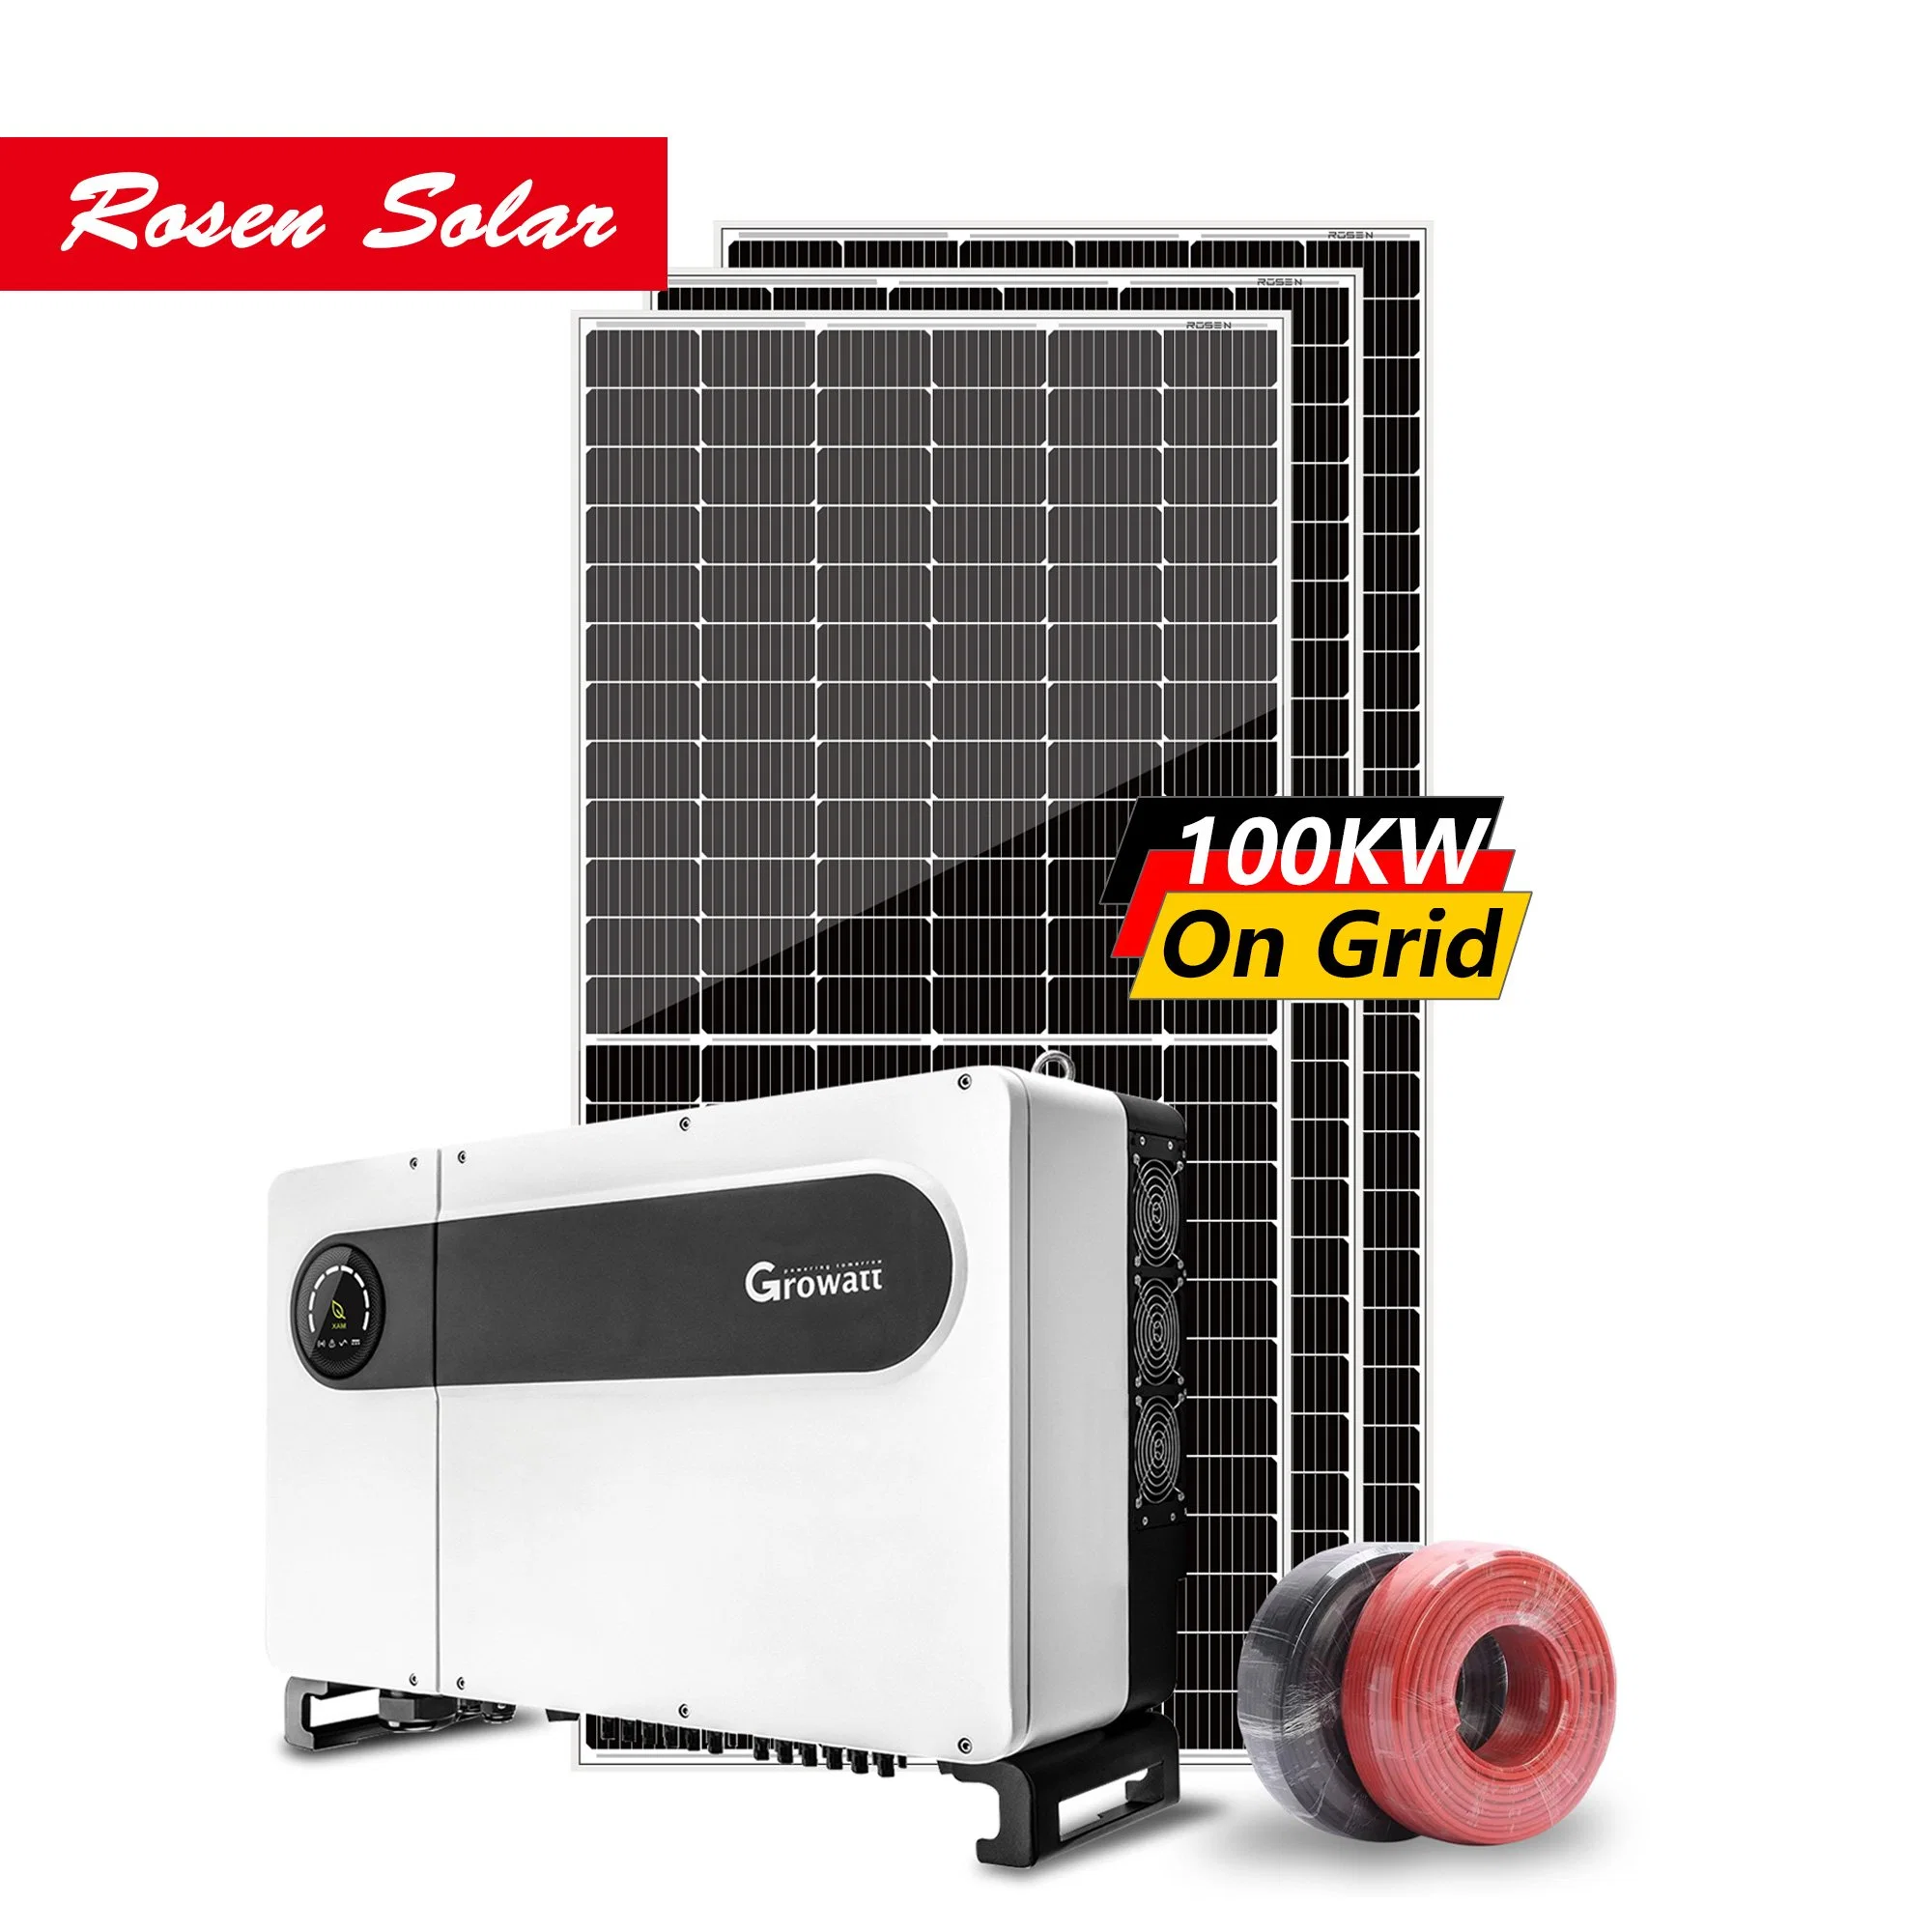 Rosen Solar Energy System preço em Dubai 100kw Solar Energy Sistema completo